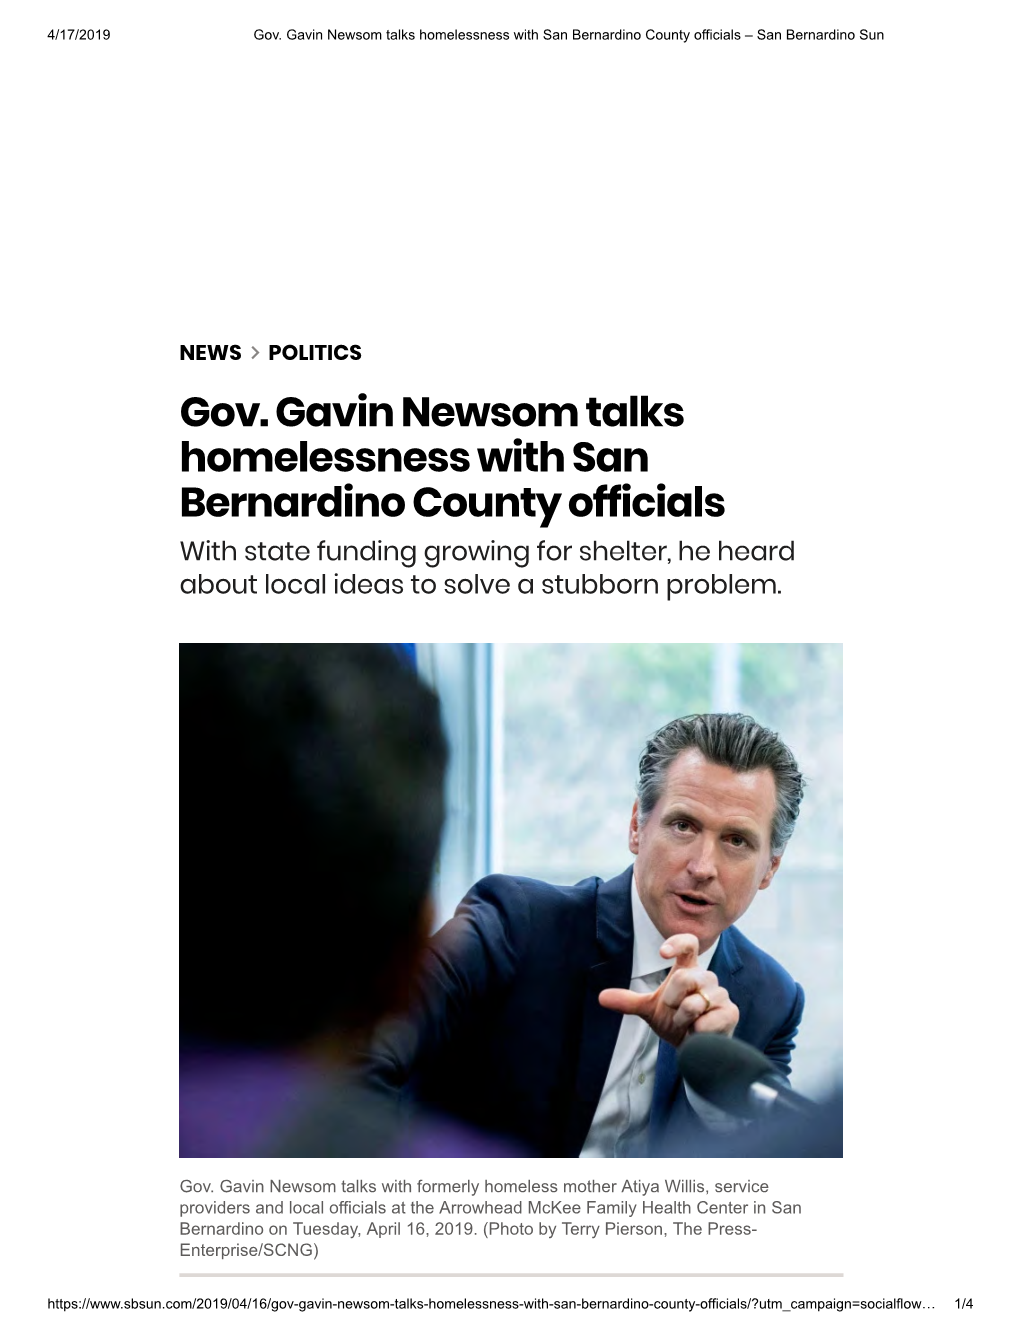 Gov. Gavin Newsom Talks Homelessness with San Bernardino County Officials – San Bernardino Sun